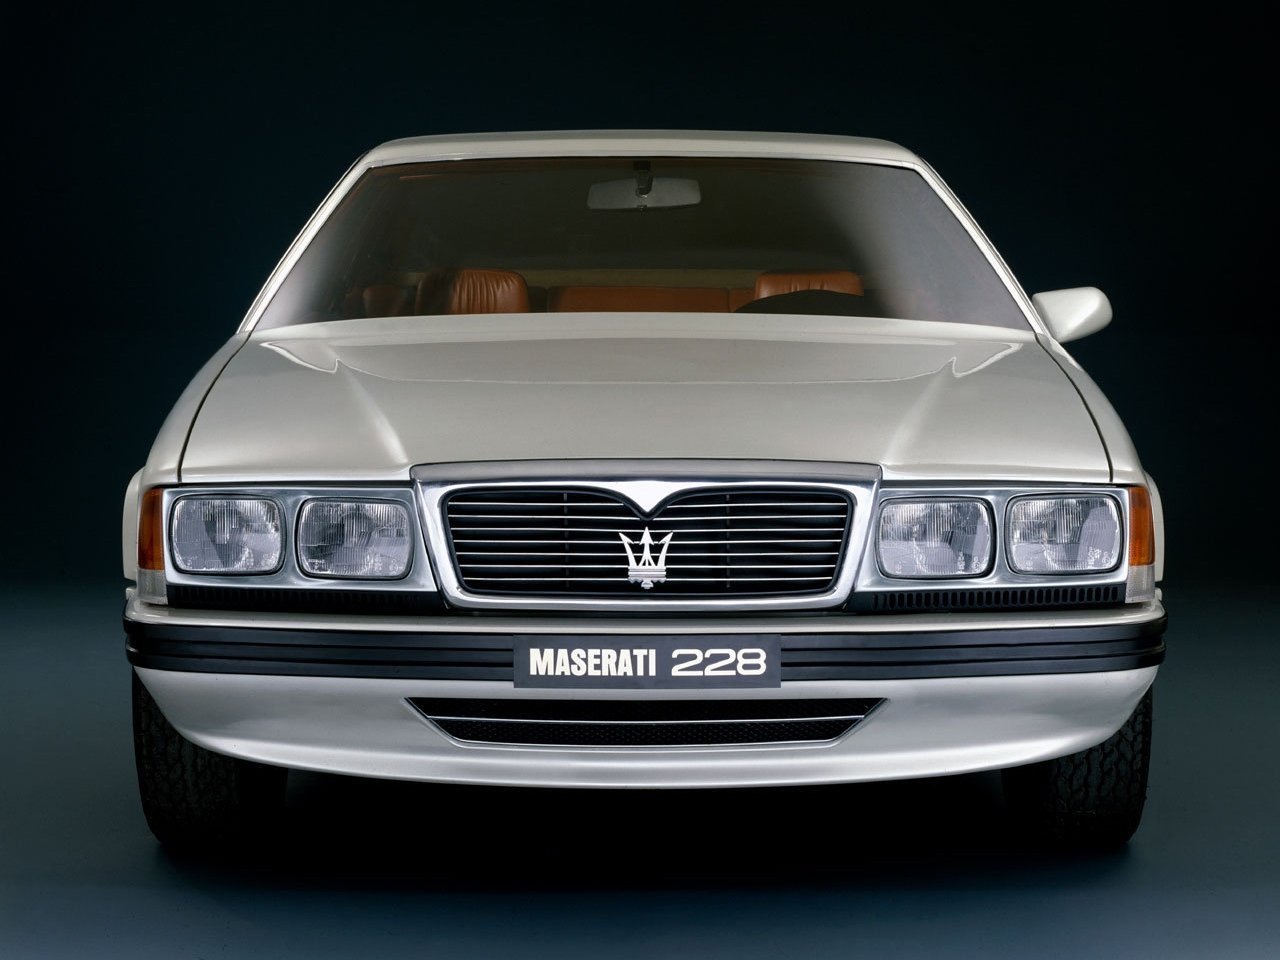 купе Maserati 228 1986 - 1992г выпуска модификация 2.8 MT (225 л.с.)